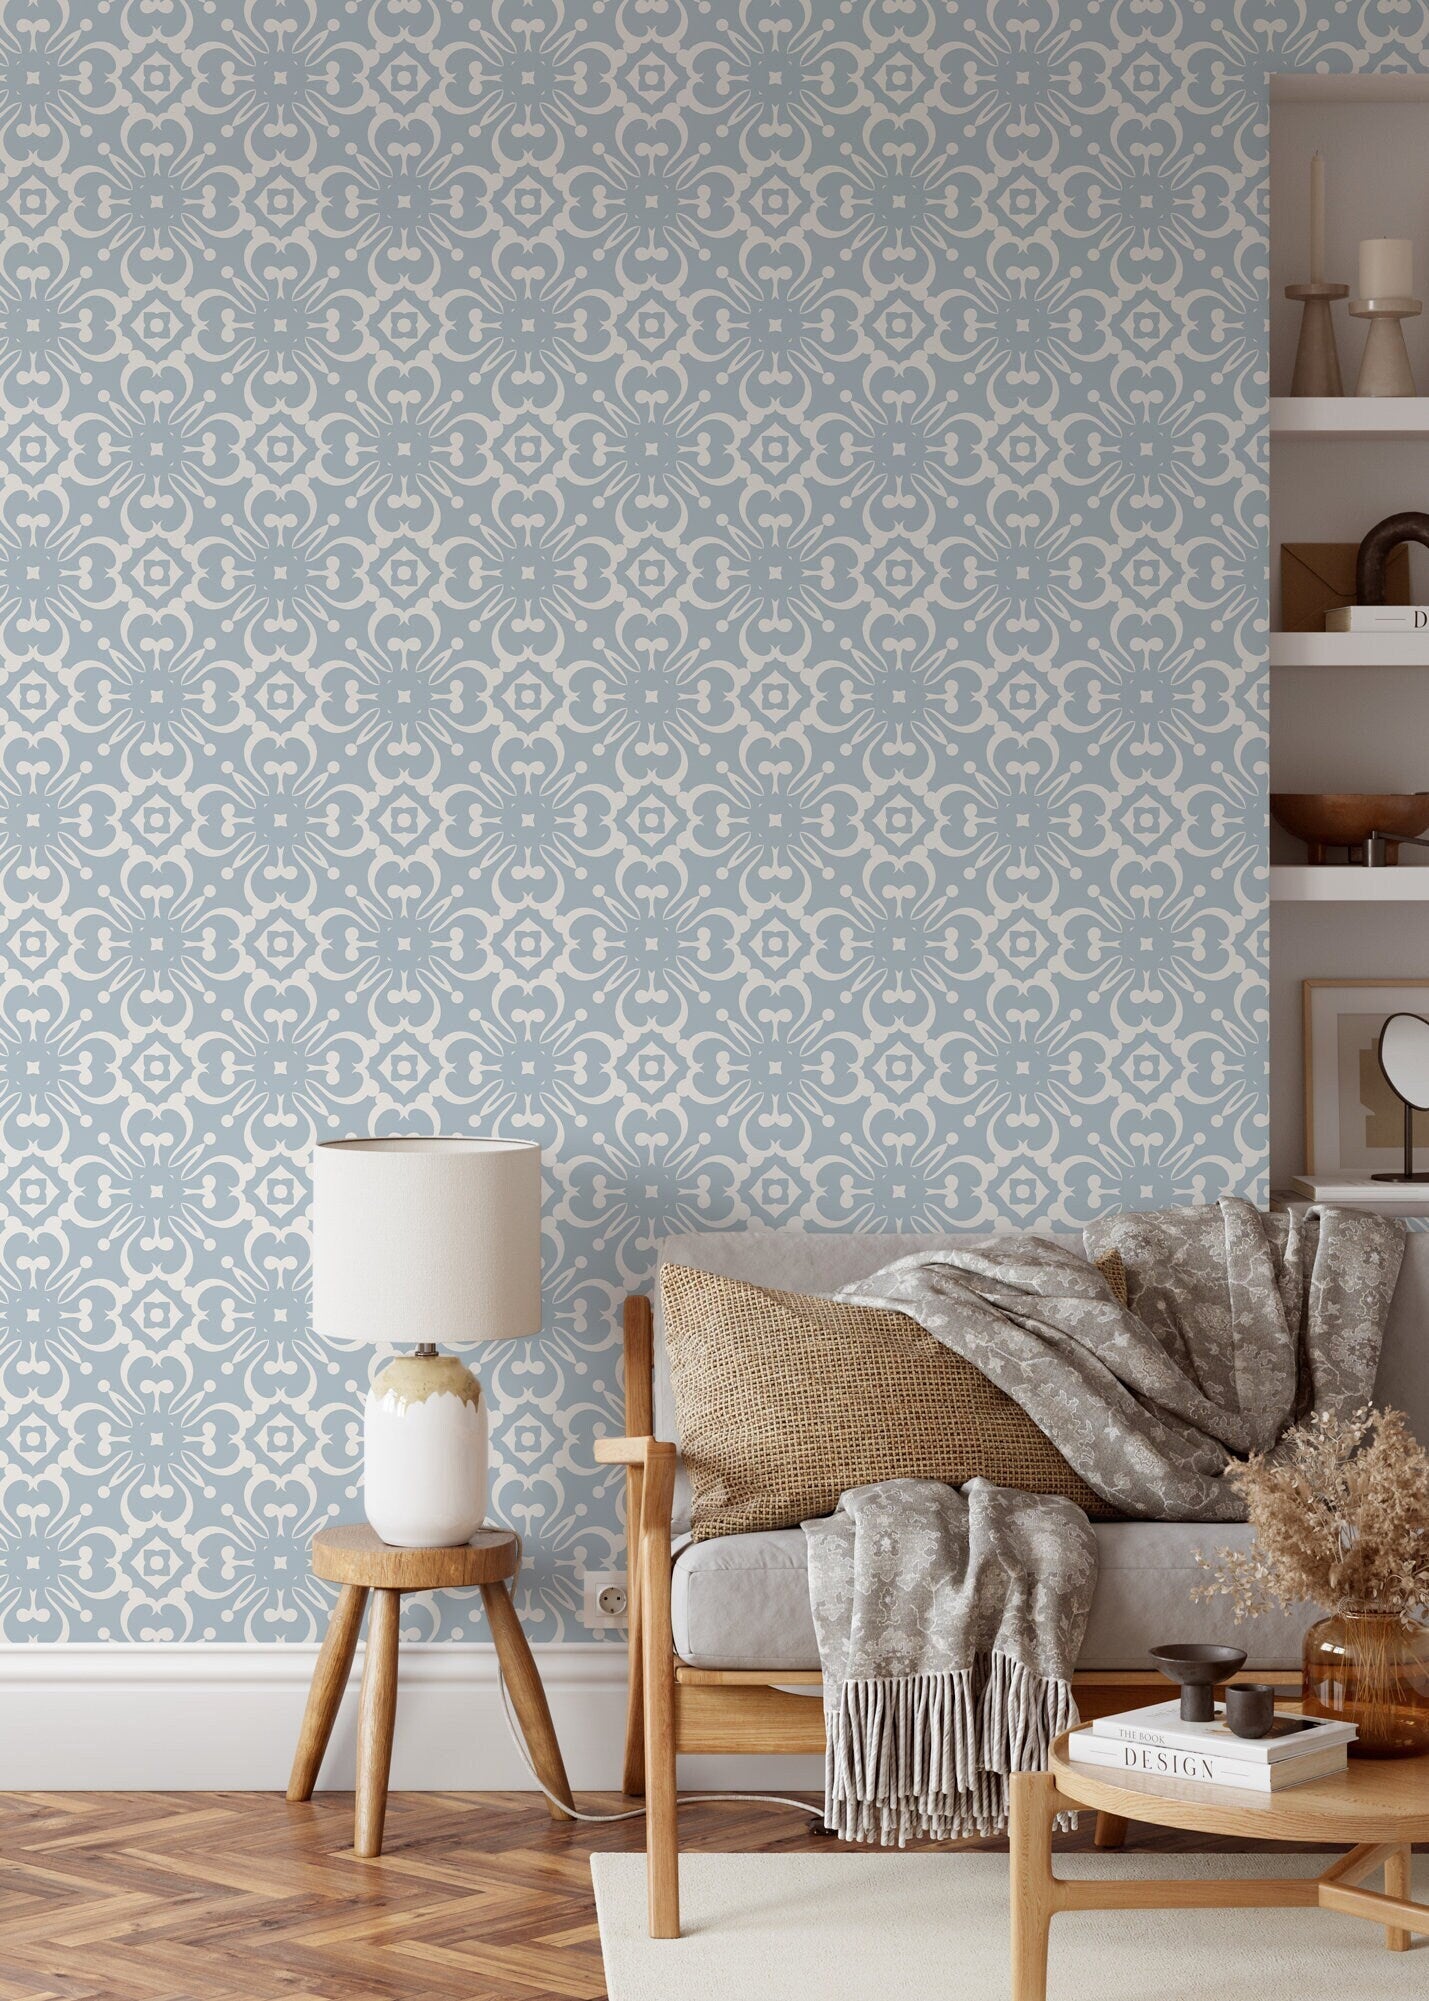 Light Blue Tile Wallpaper / Peel and Stick Wallpaper Removable Wallpaper Home Decor Wall Art Wall Decor Room Decor - D178